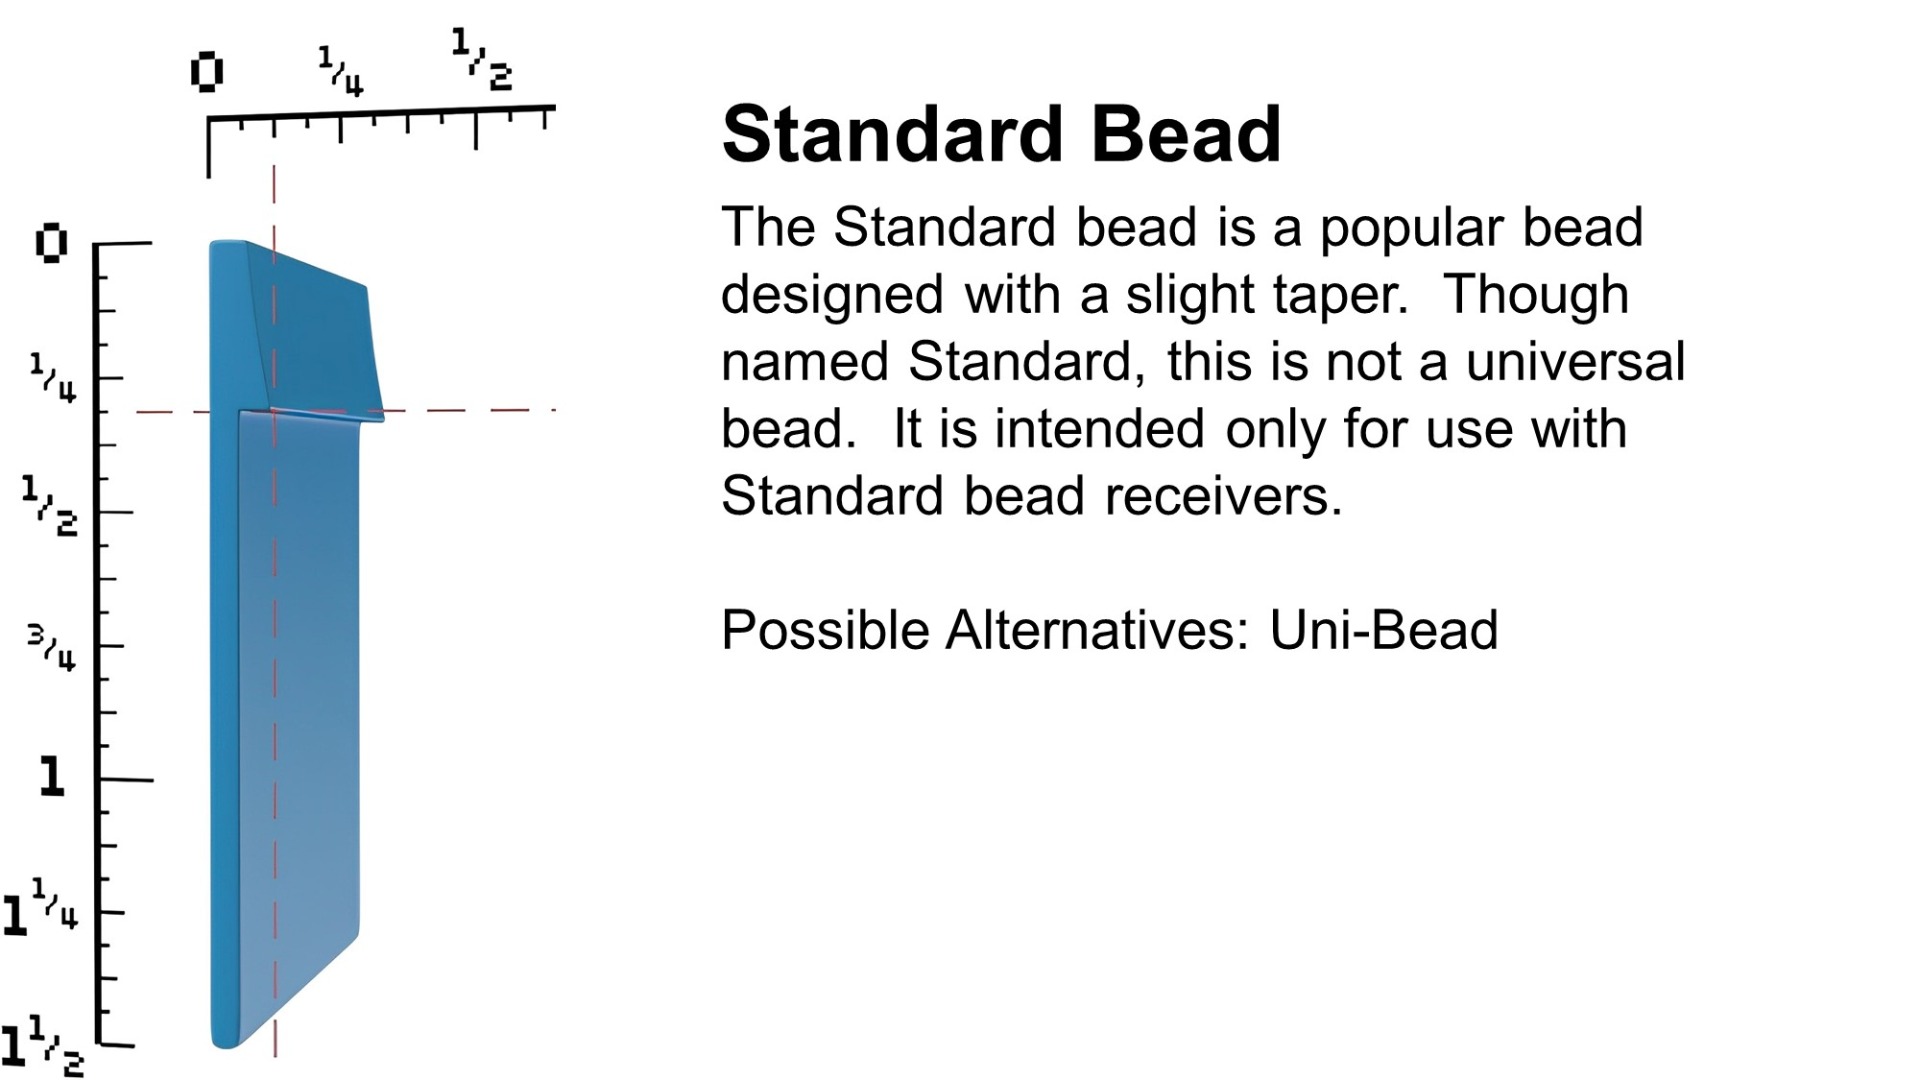 Standard Bead